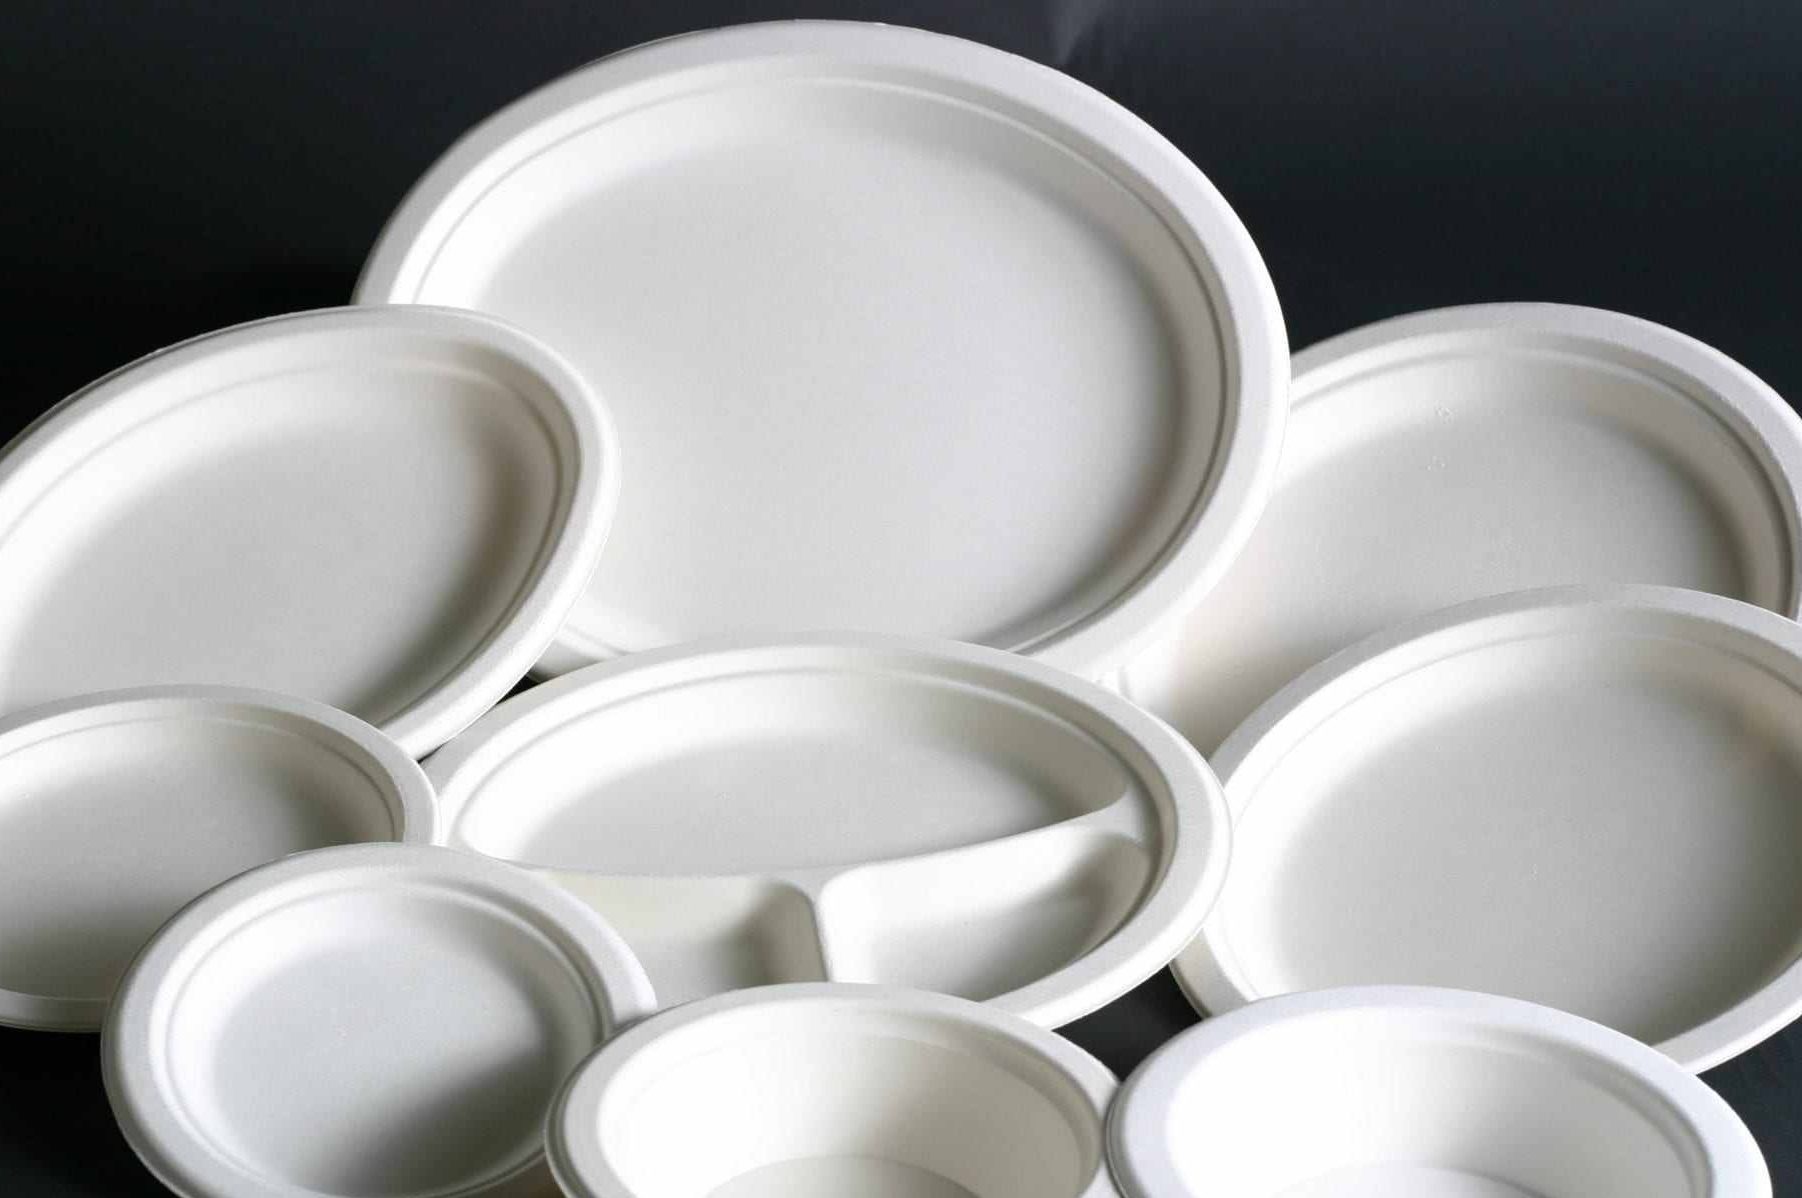 Buy plastic dinnerware sets Types + Price